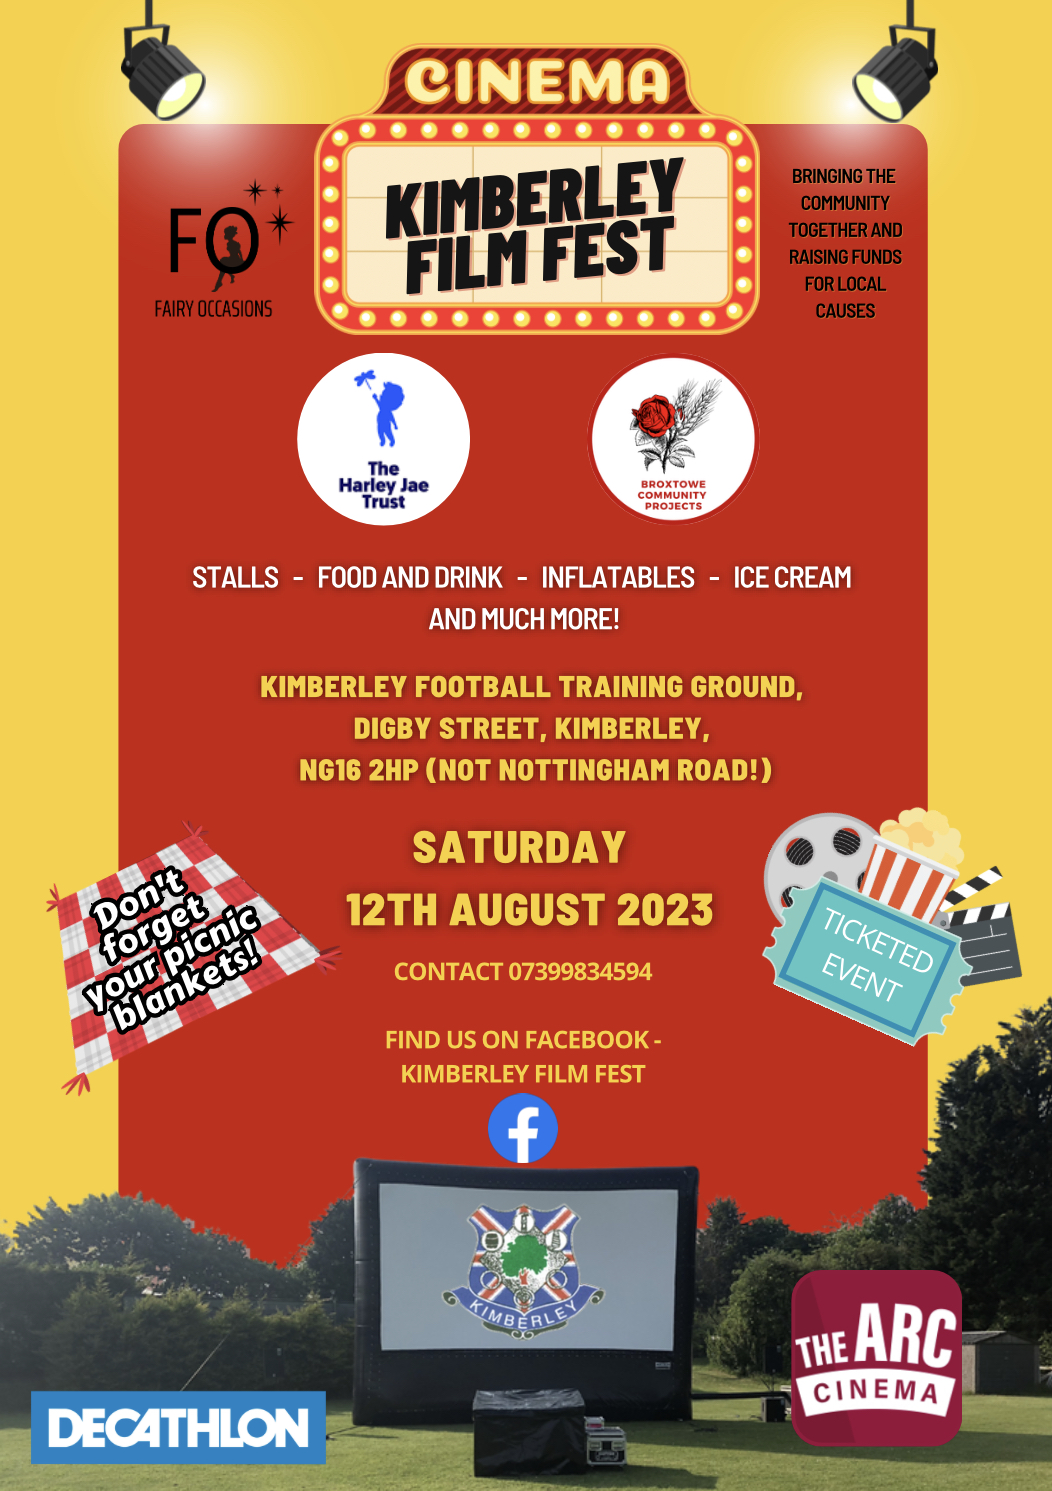 Kimberley Film Fest  event.